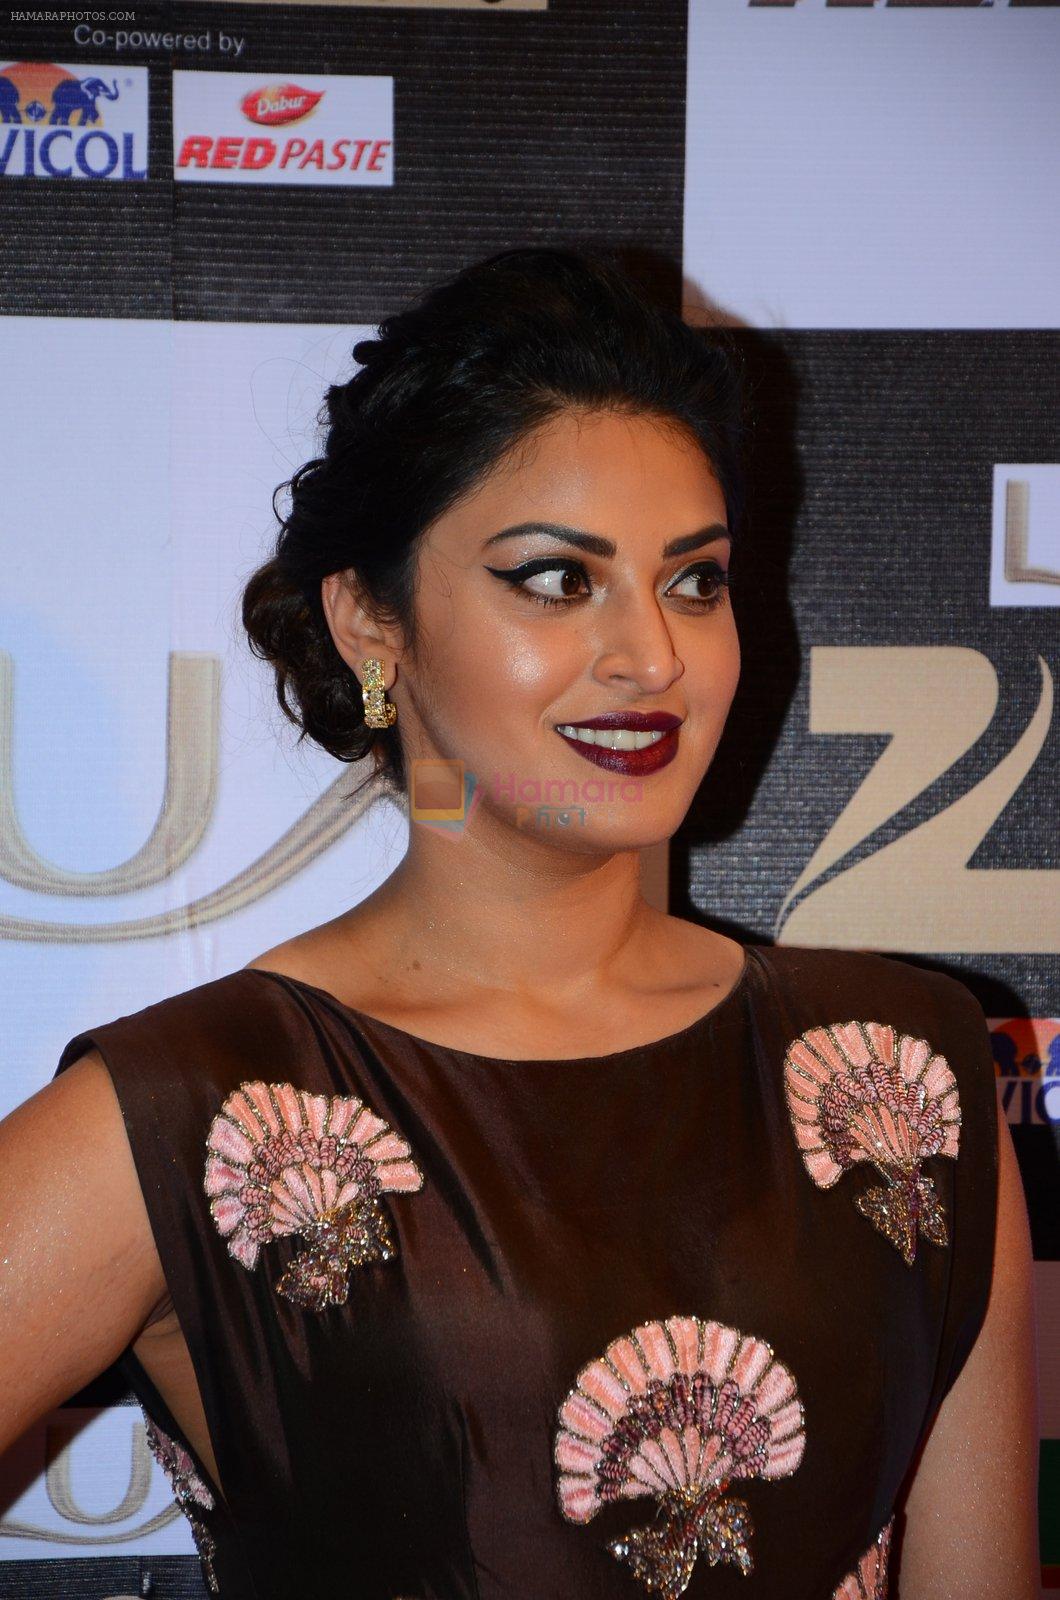 Anushka Ranjan at zee cine awards 2016 on 20th Feb 2016